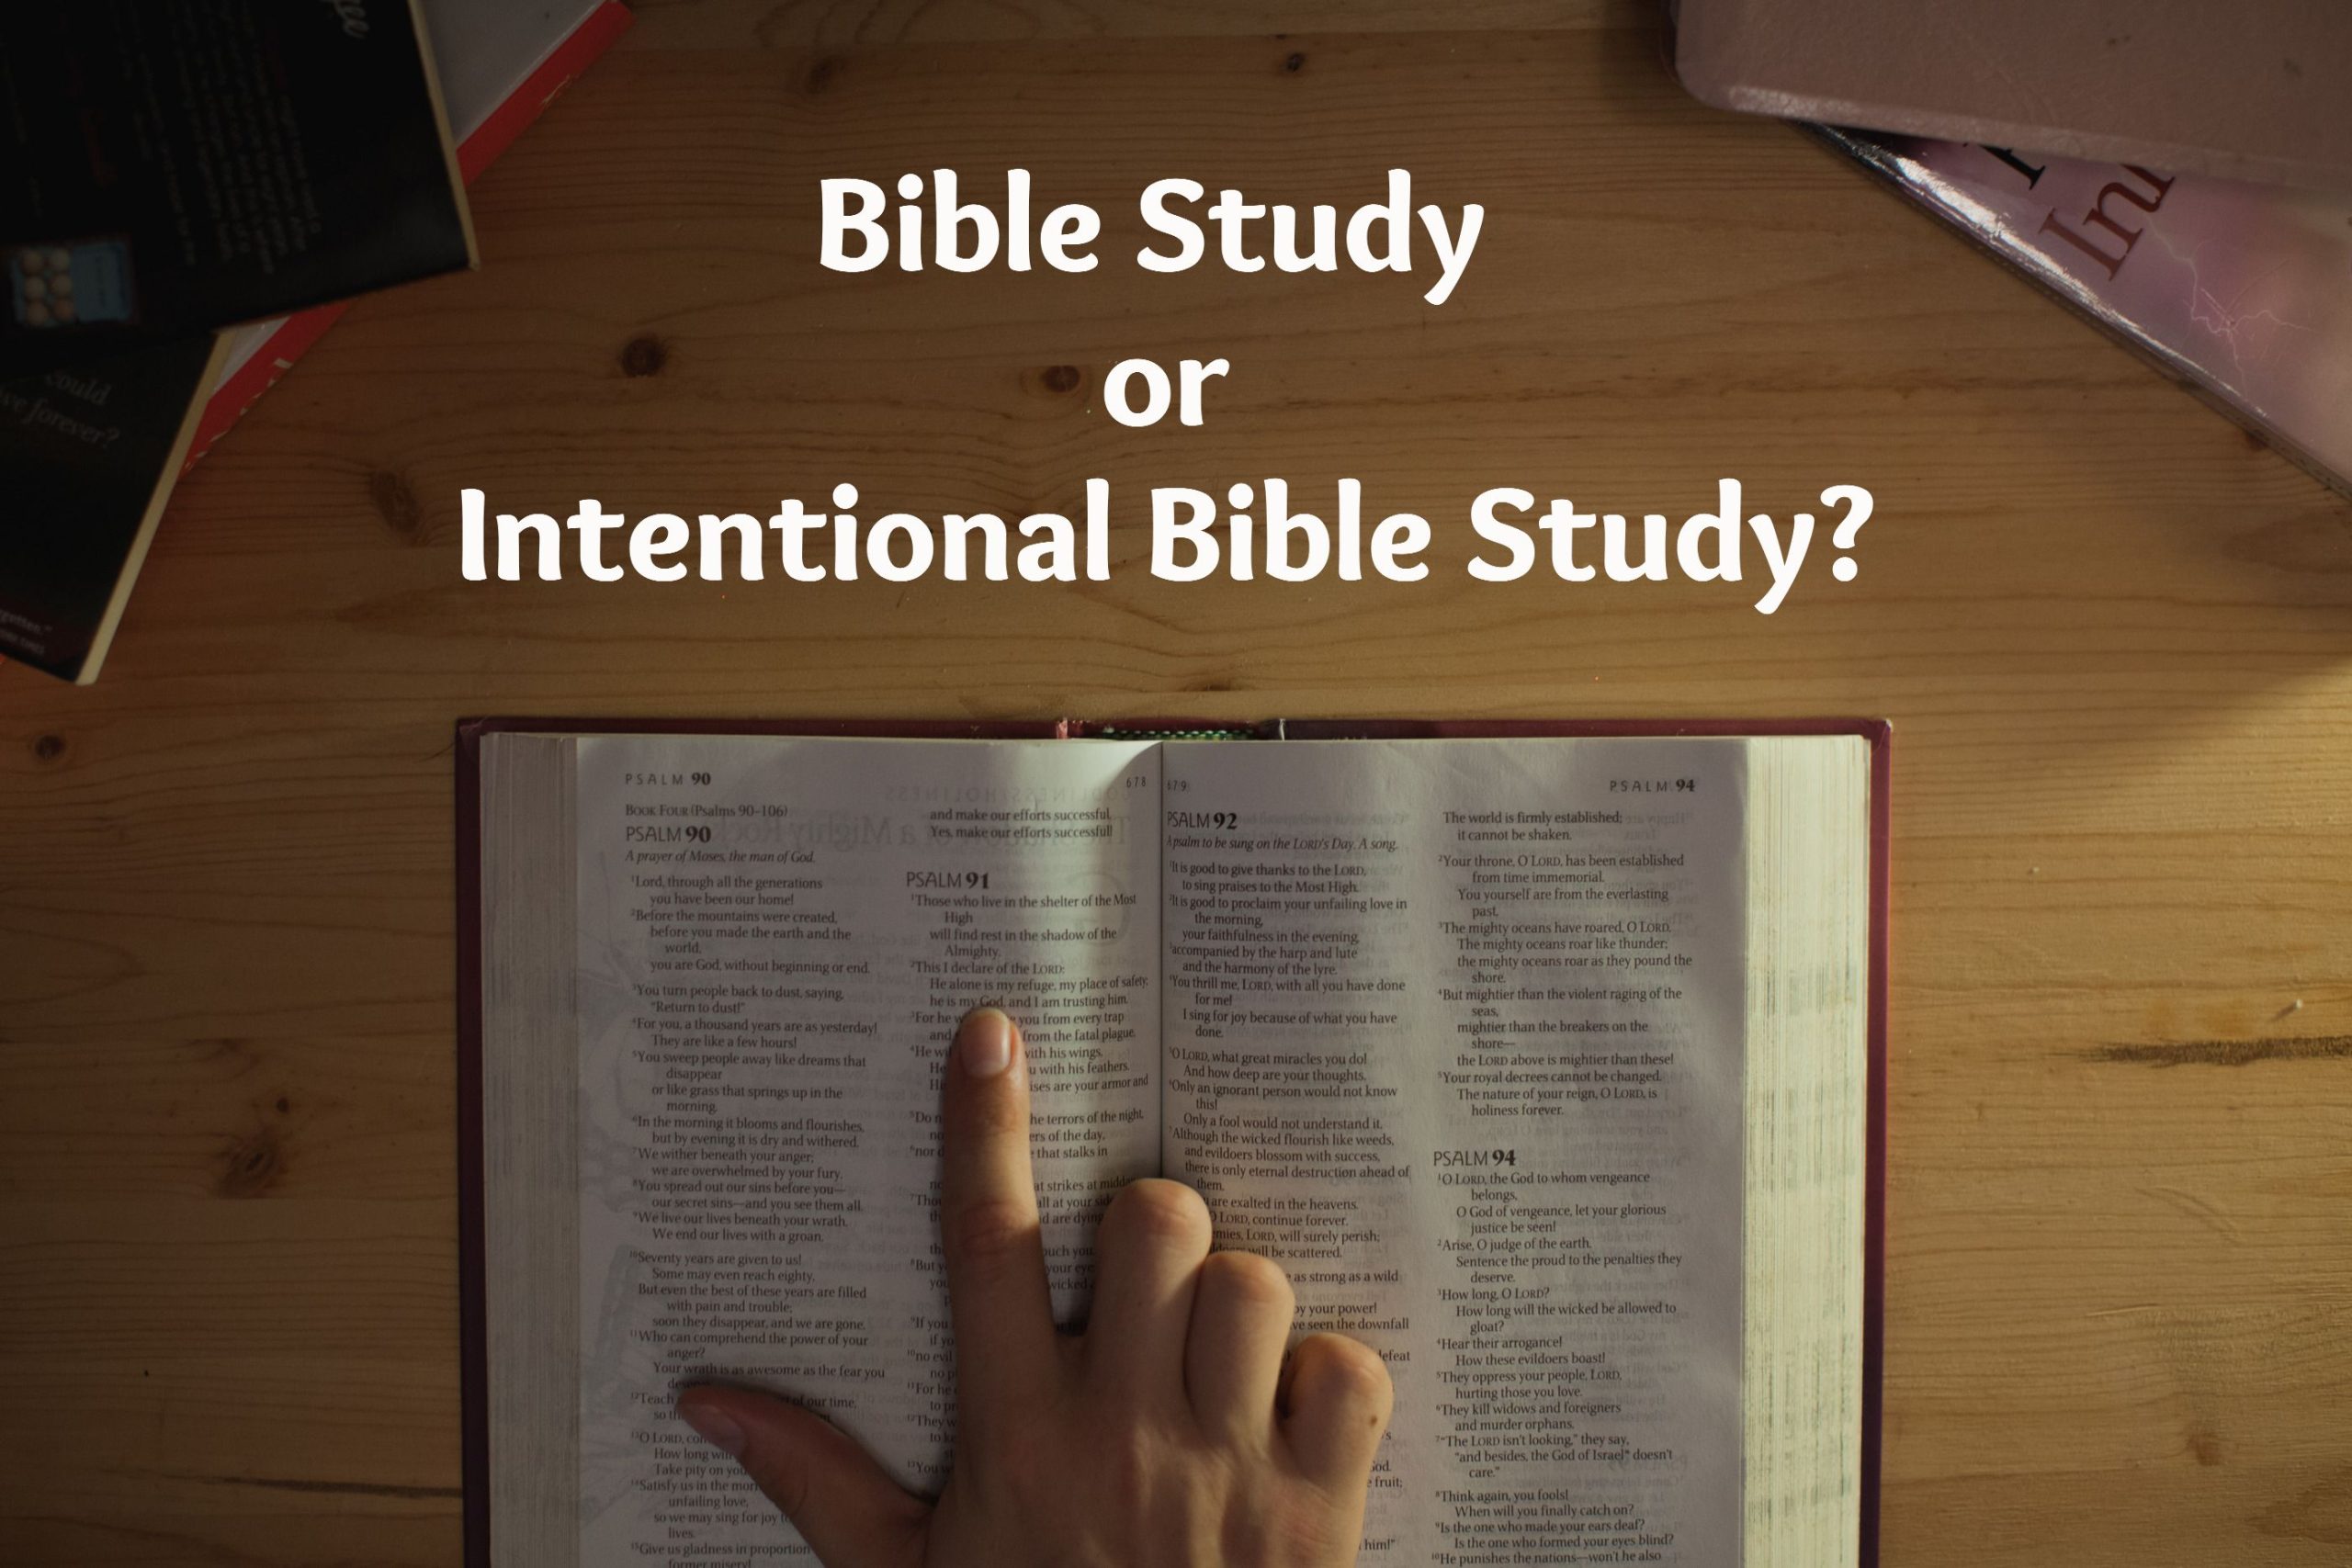 Intentional Bible study